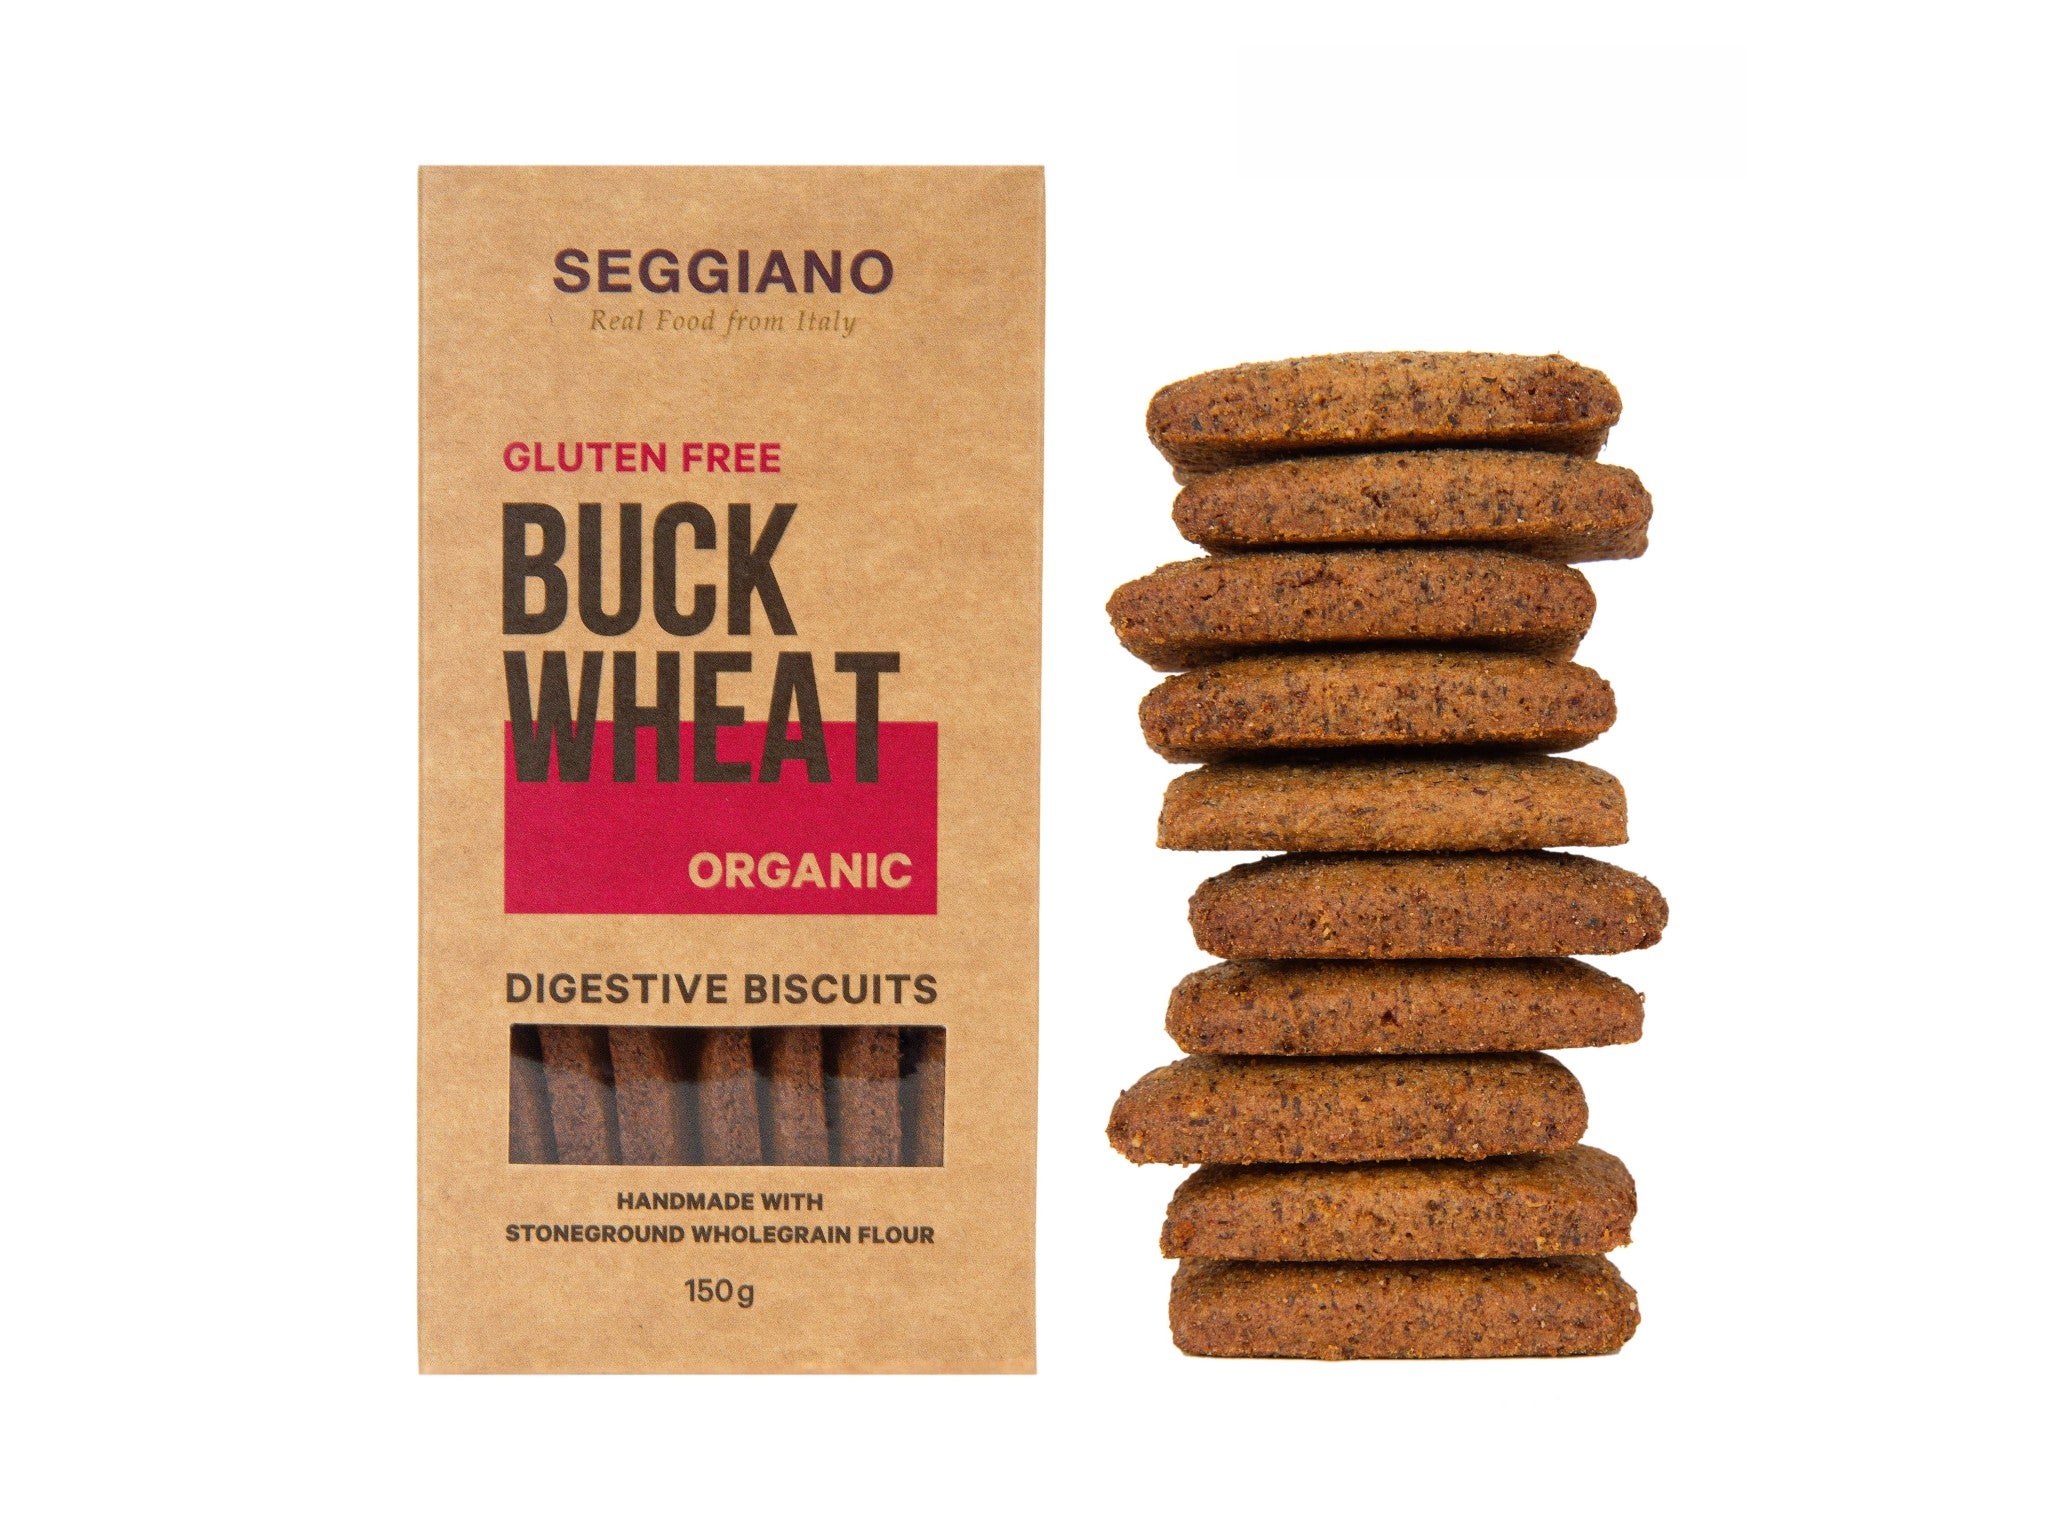  Seggiano organic buckwheat digestive biscuits indybest.jpg